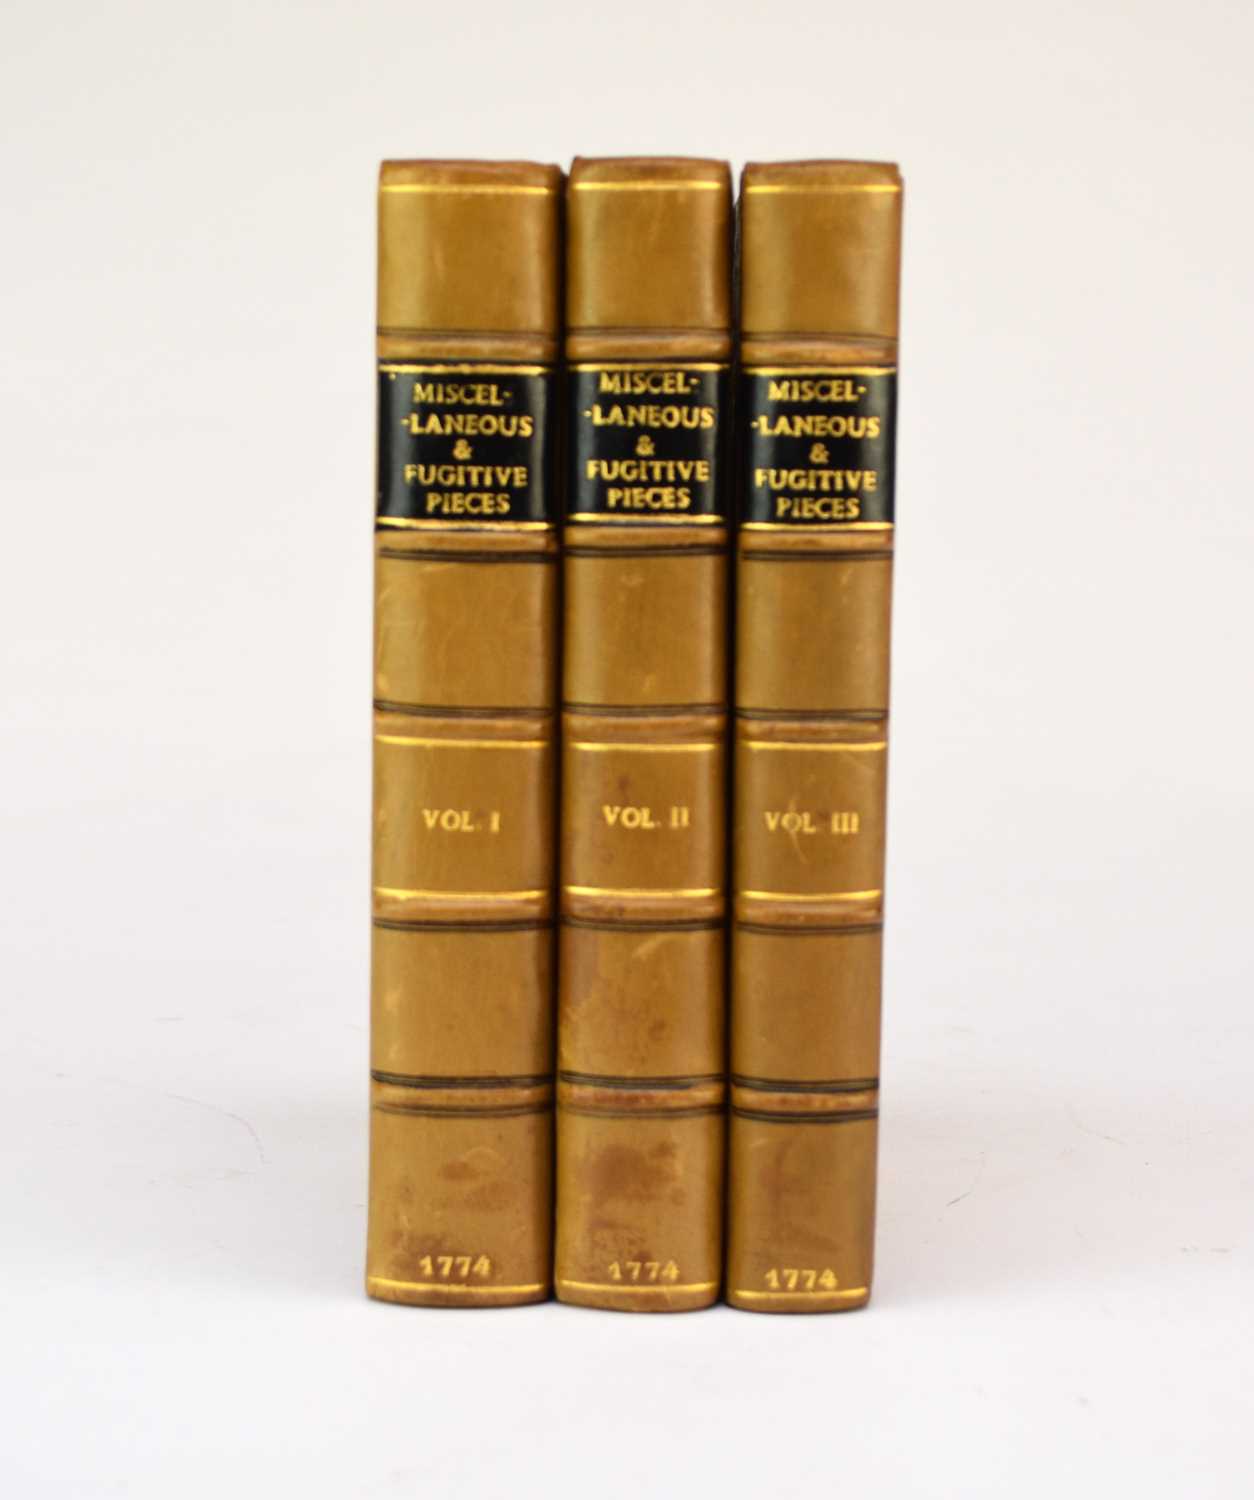 Lot 1078 - JOHNSON, Samuel. Miscellaneous and Fugitive Pieces. 3 vols, 1774.